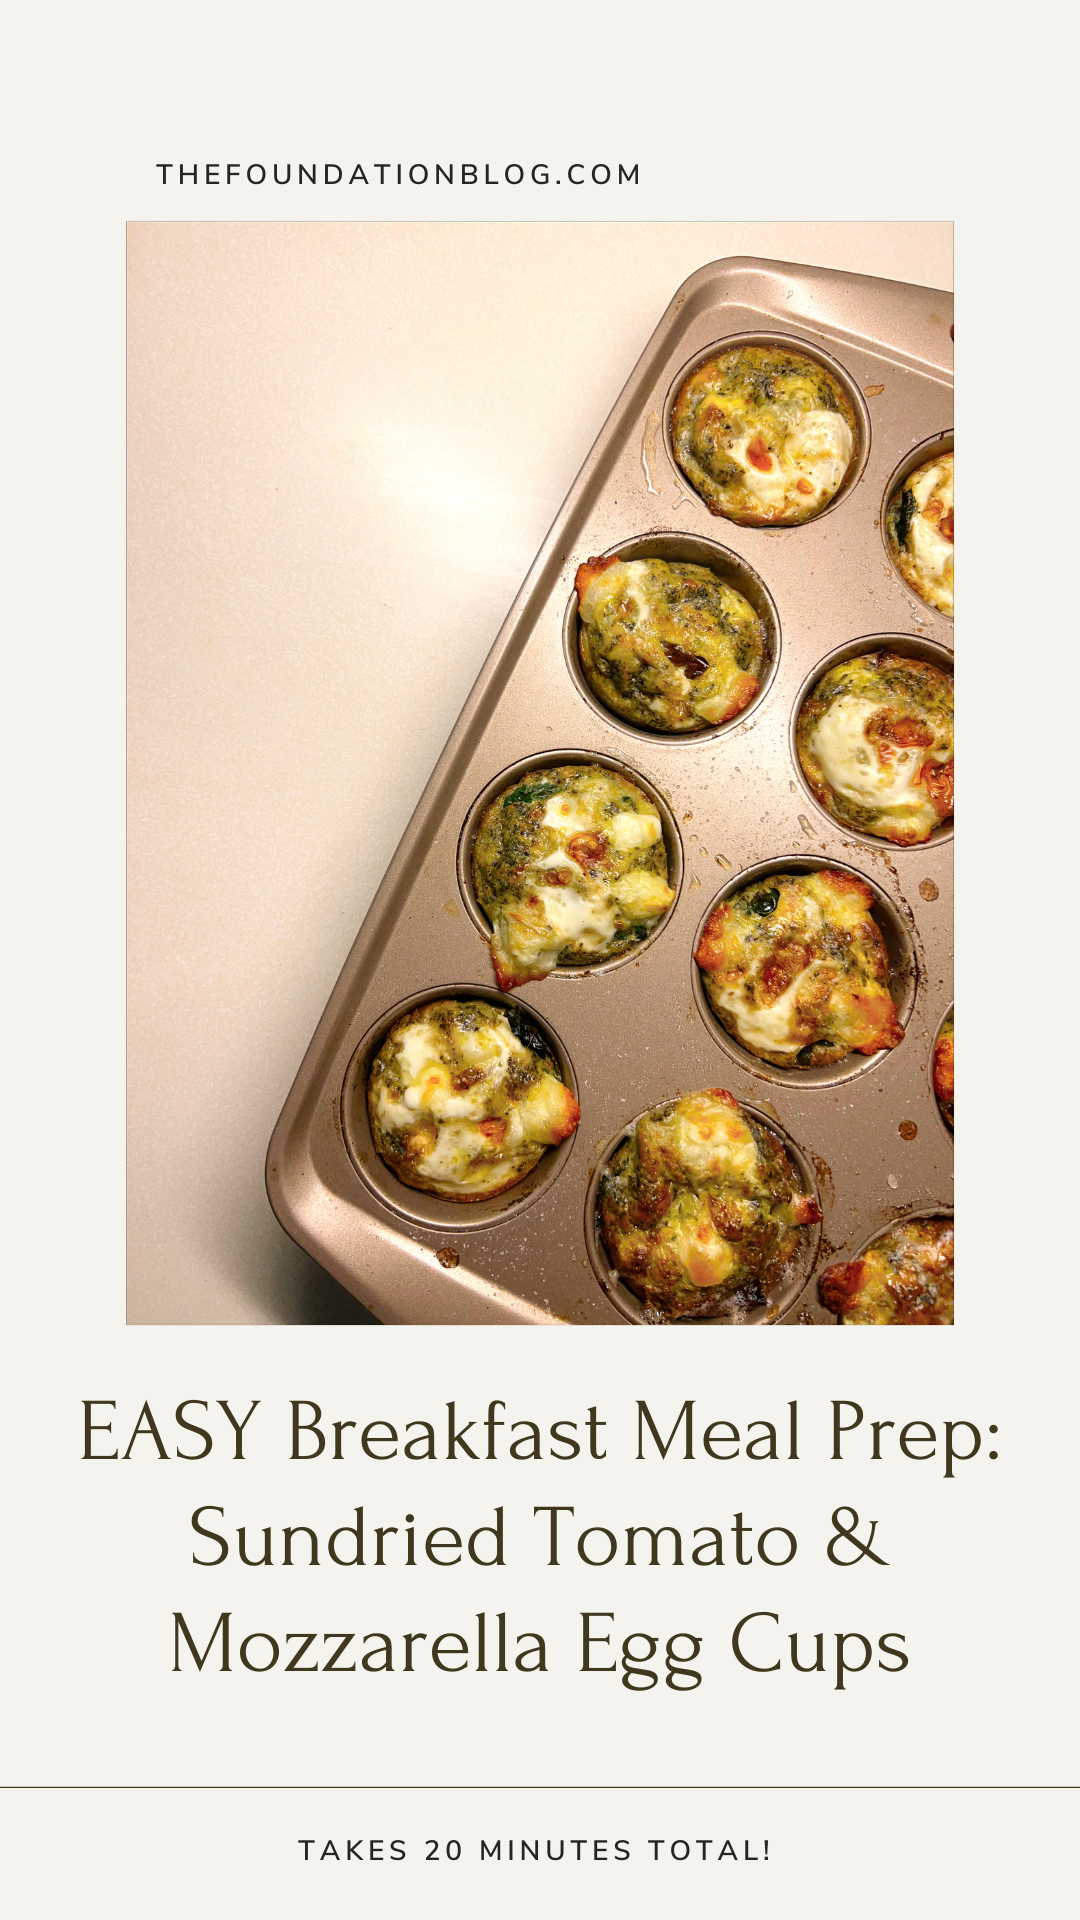 Easy Breakfast Meal Prep: Sundried Tomato & Mozzarella Egg Cups